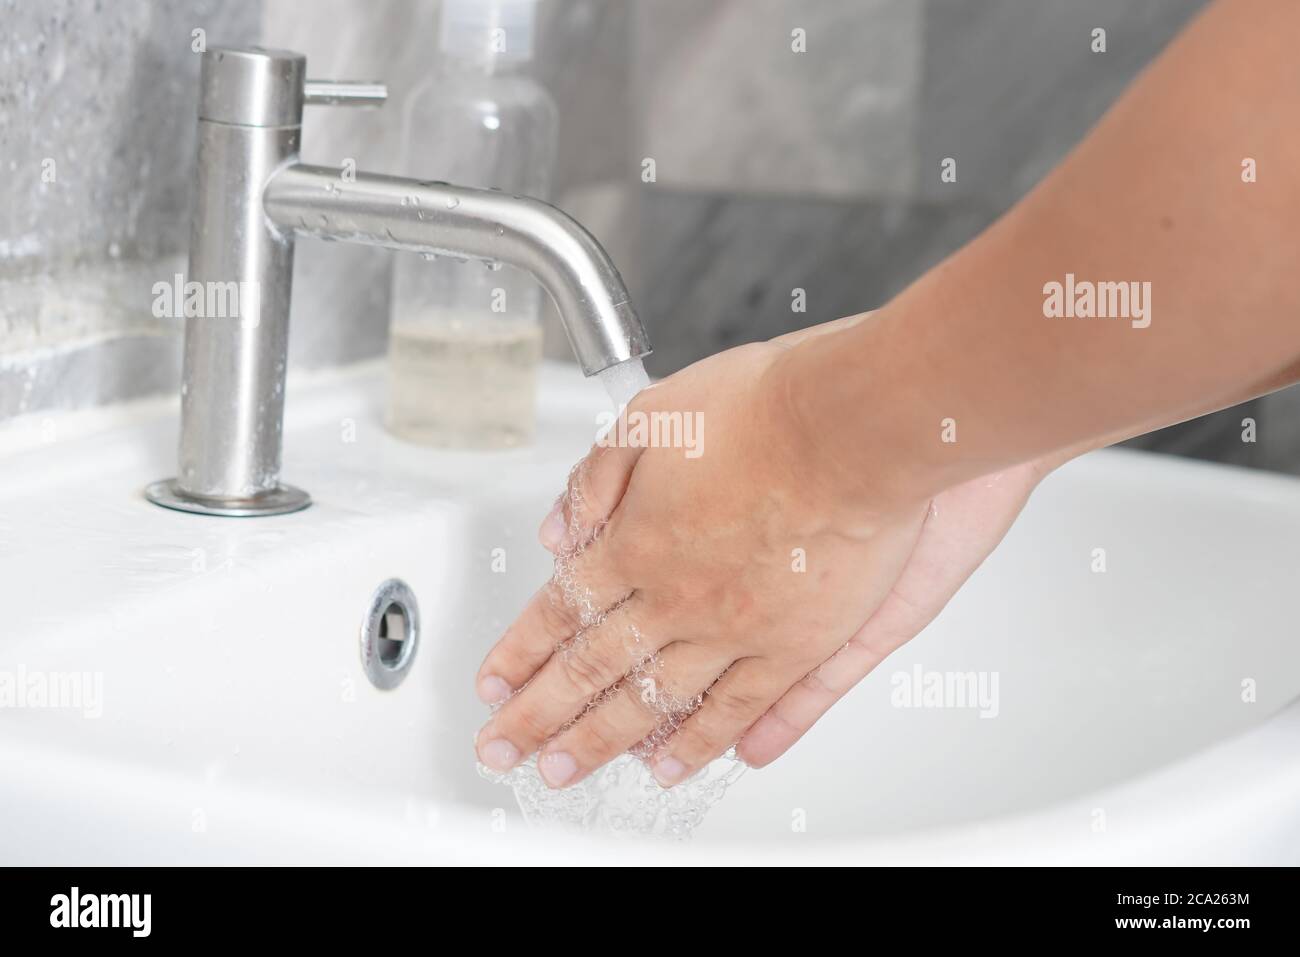 Hands washing for prevention of novel Coronavirus Disease 2019 or COVID-19 . Stock Photo